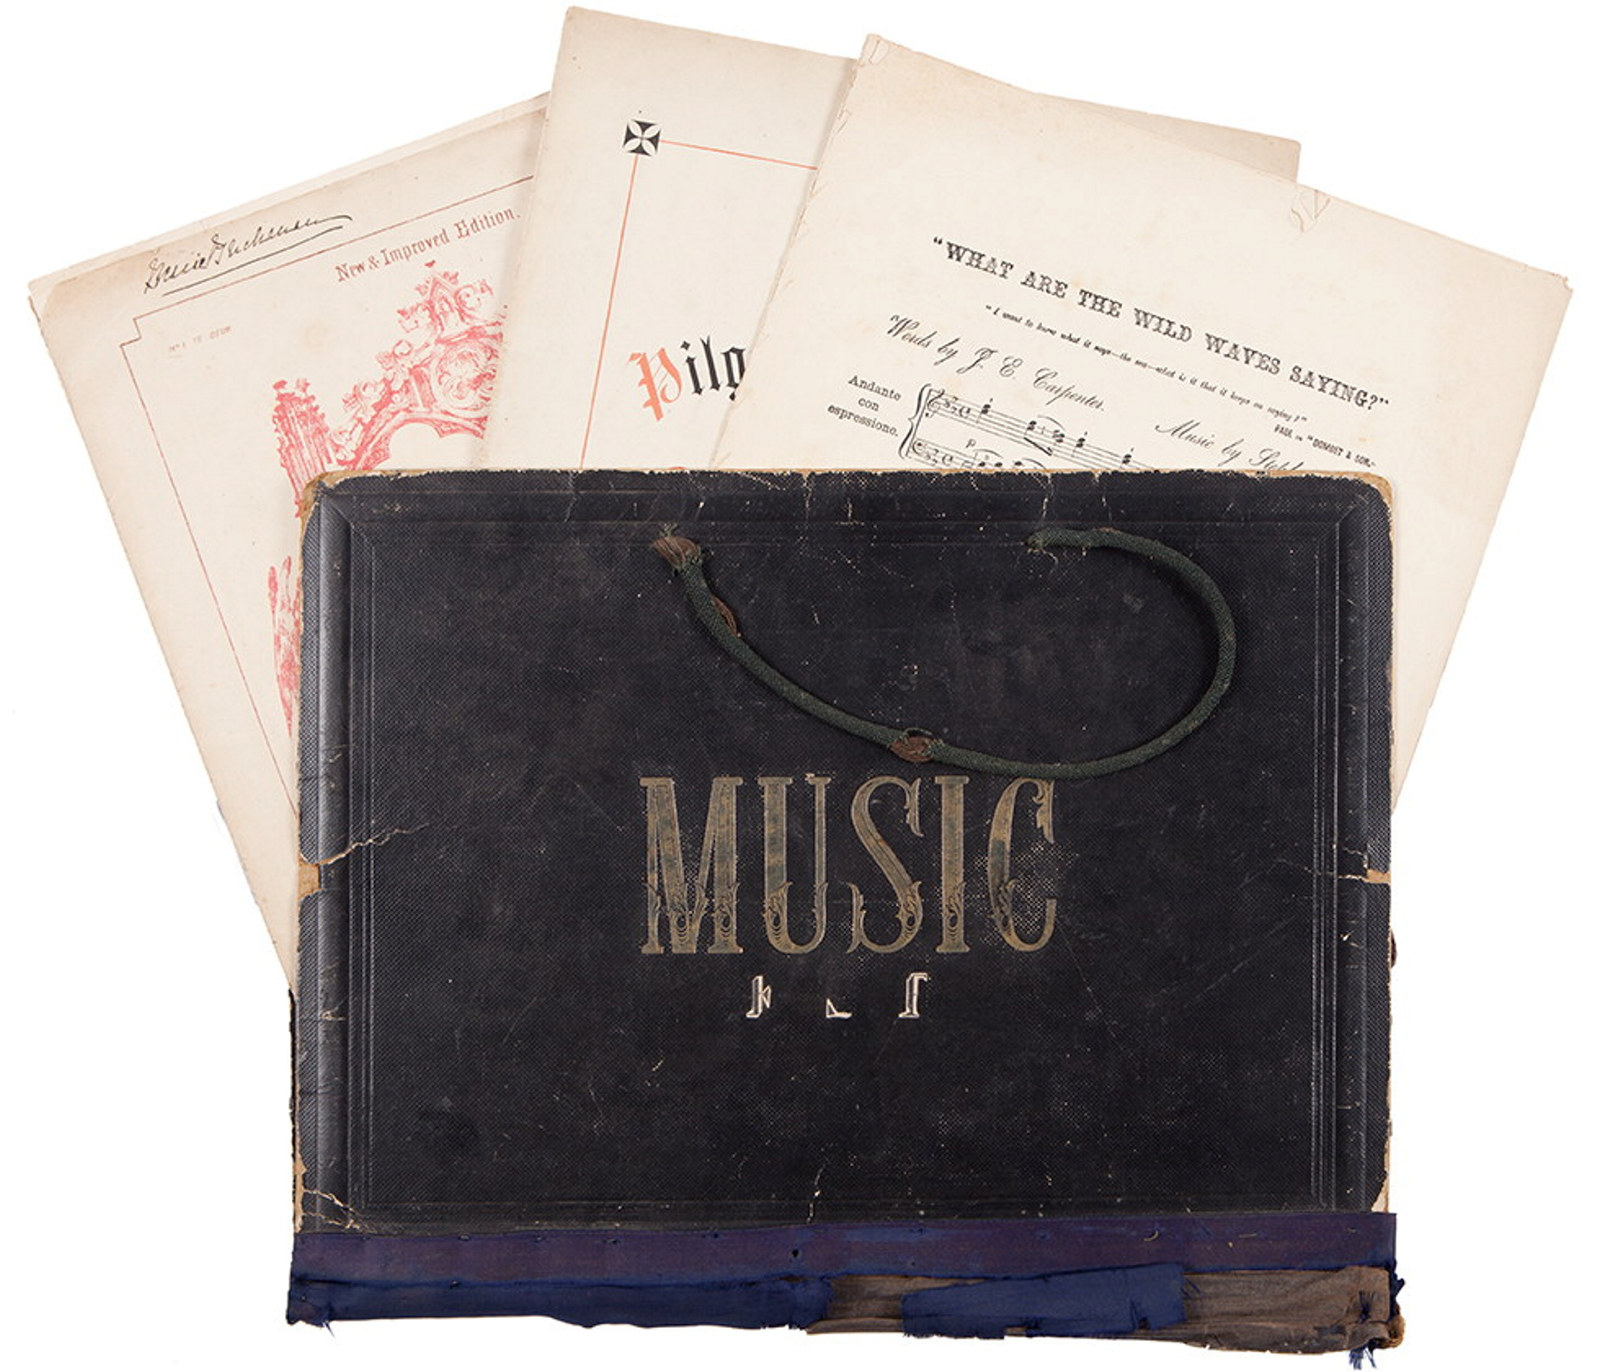  Black leather covered music folio